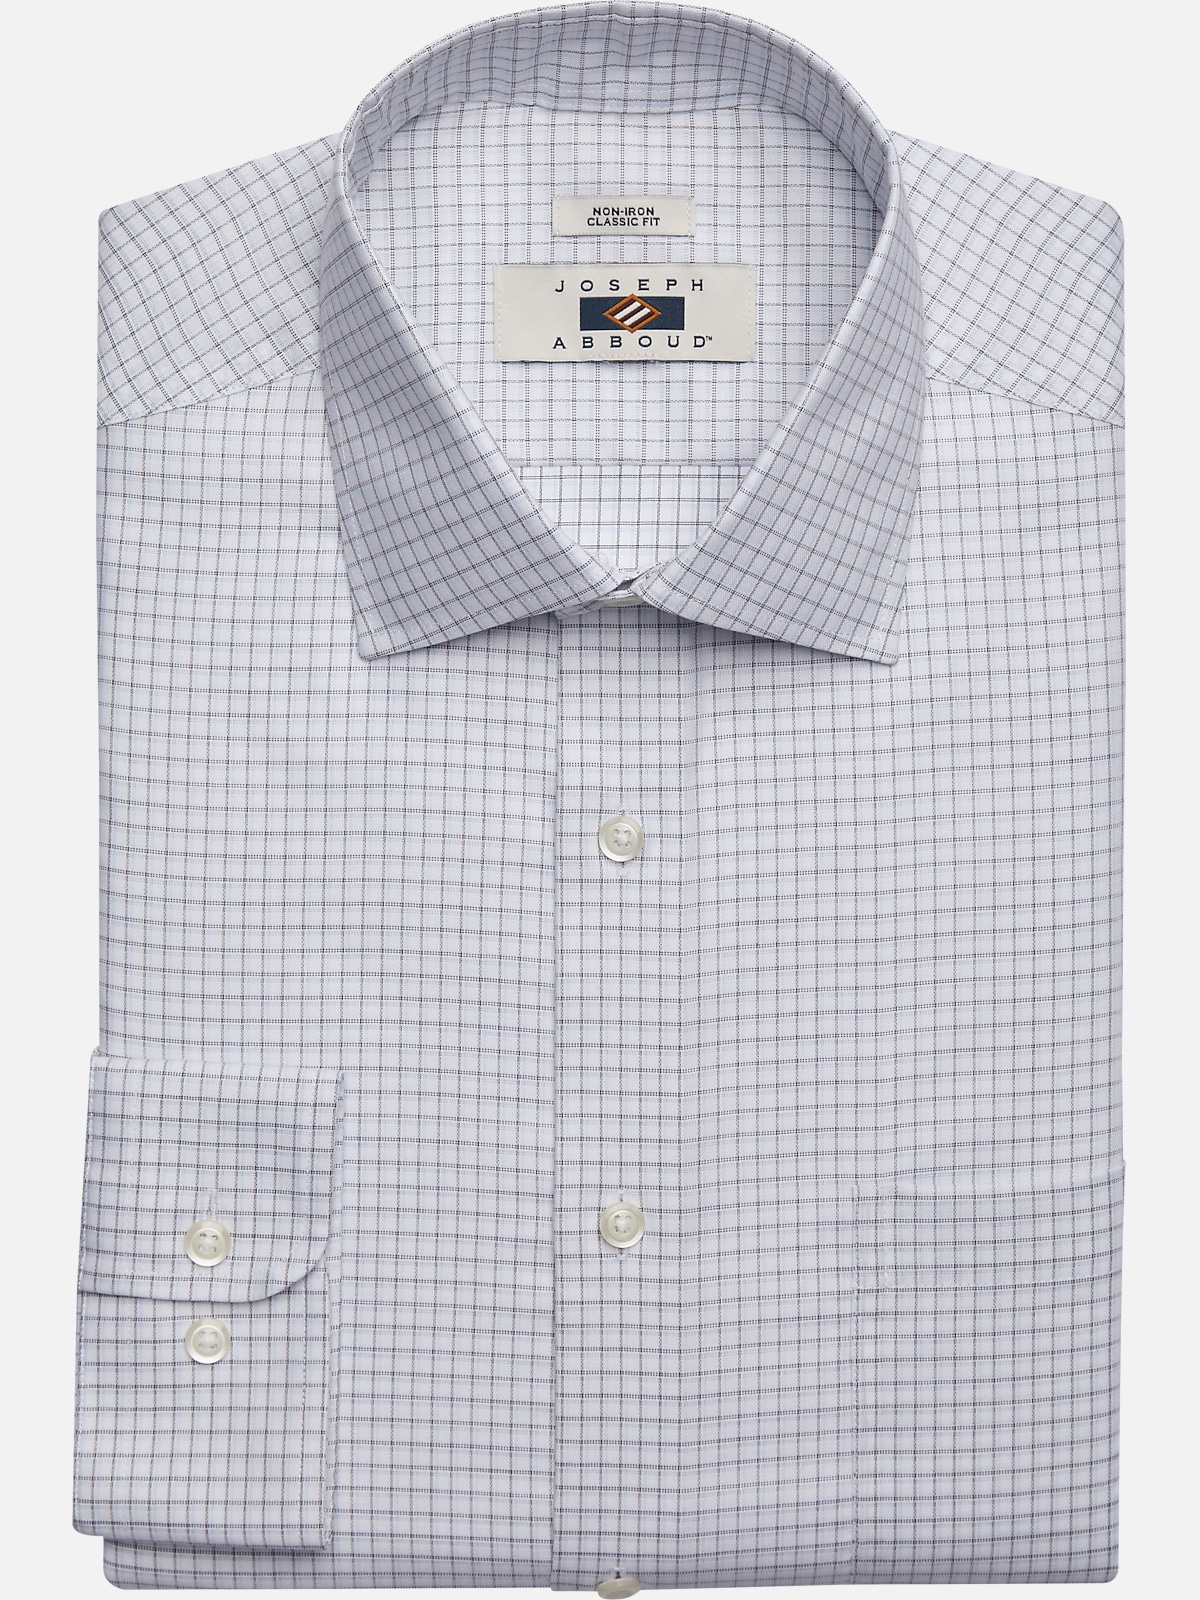 Joseph Abboud Classic Fit Spread Collar Dress Shirt | Clearance Dress  Shirts| Men's Wearhouse